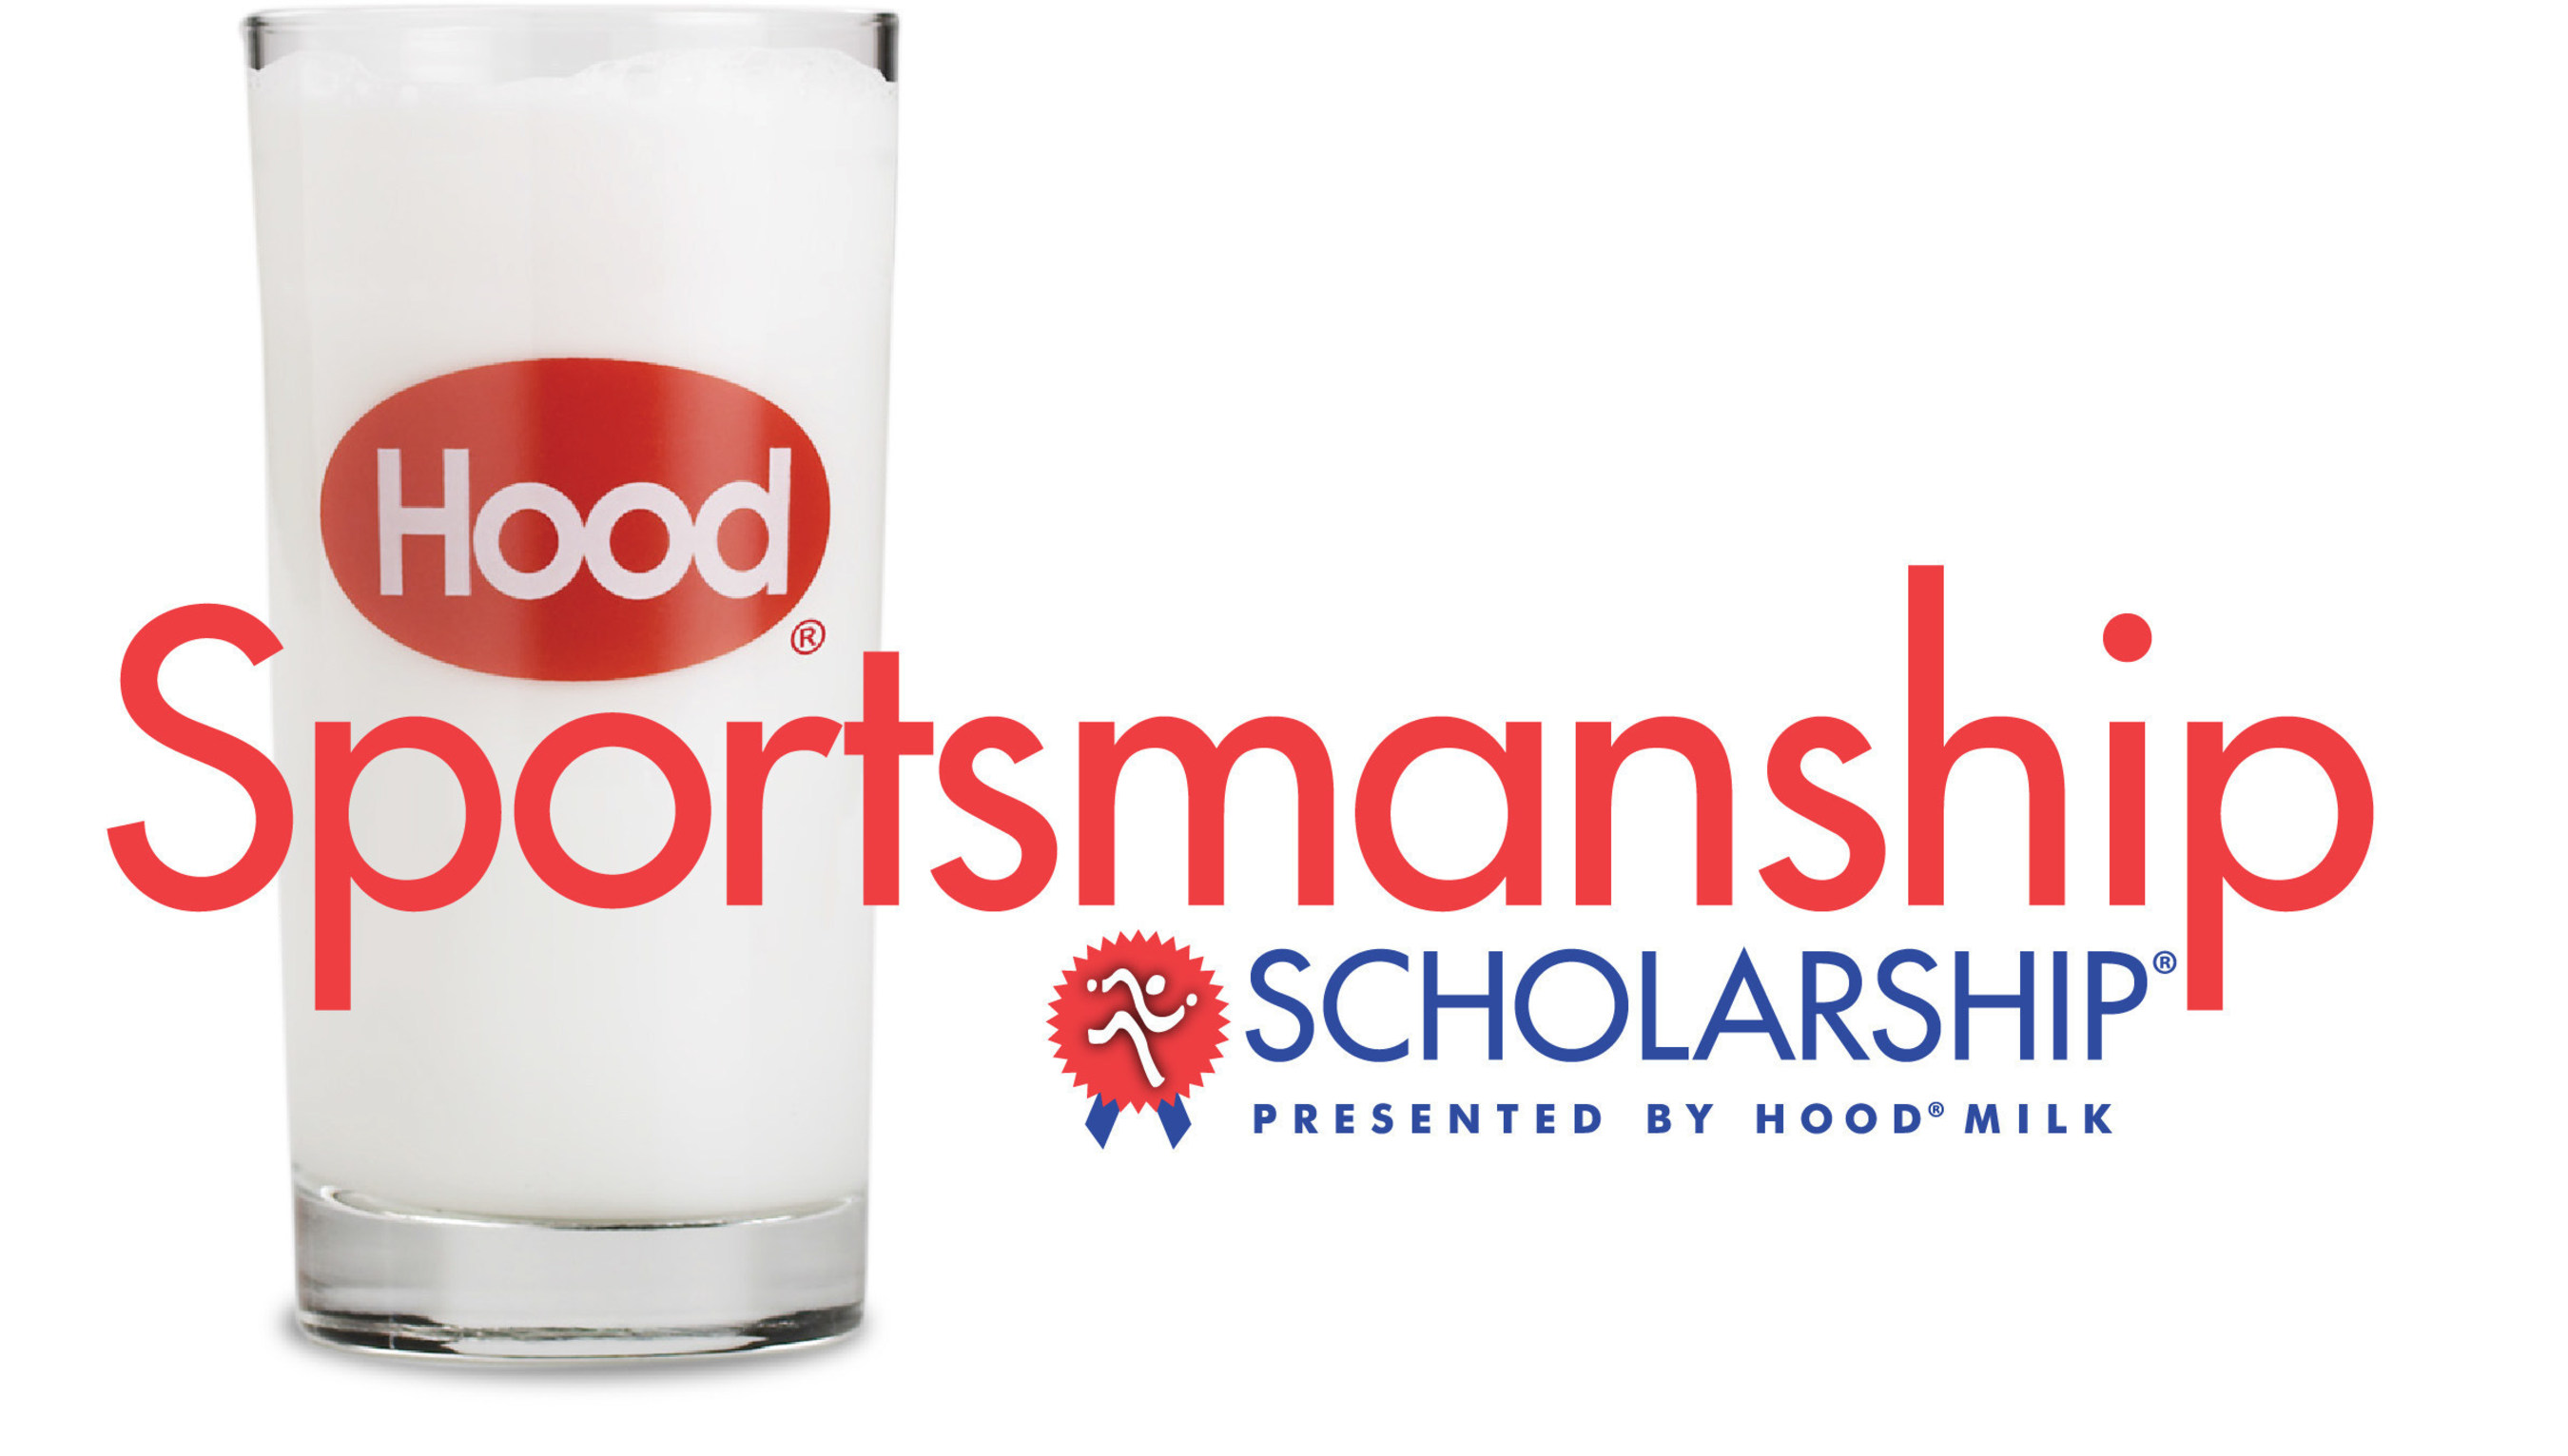 Hood Milk Announces Sixth Annual Hood Sportsmanship Scholarship Program.